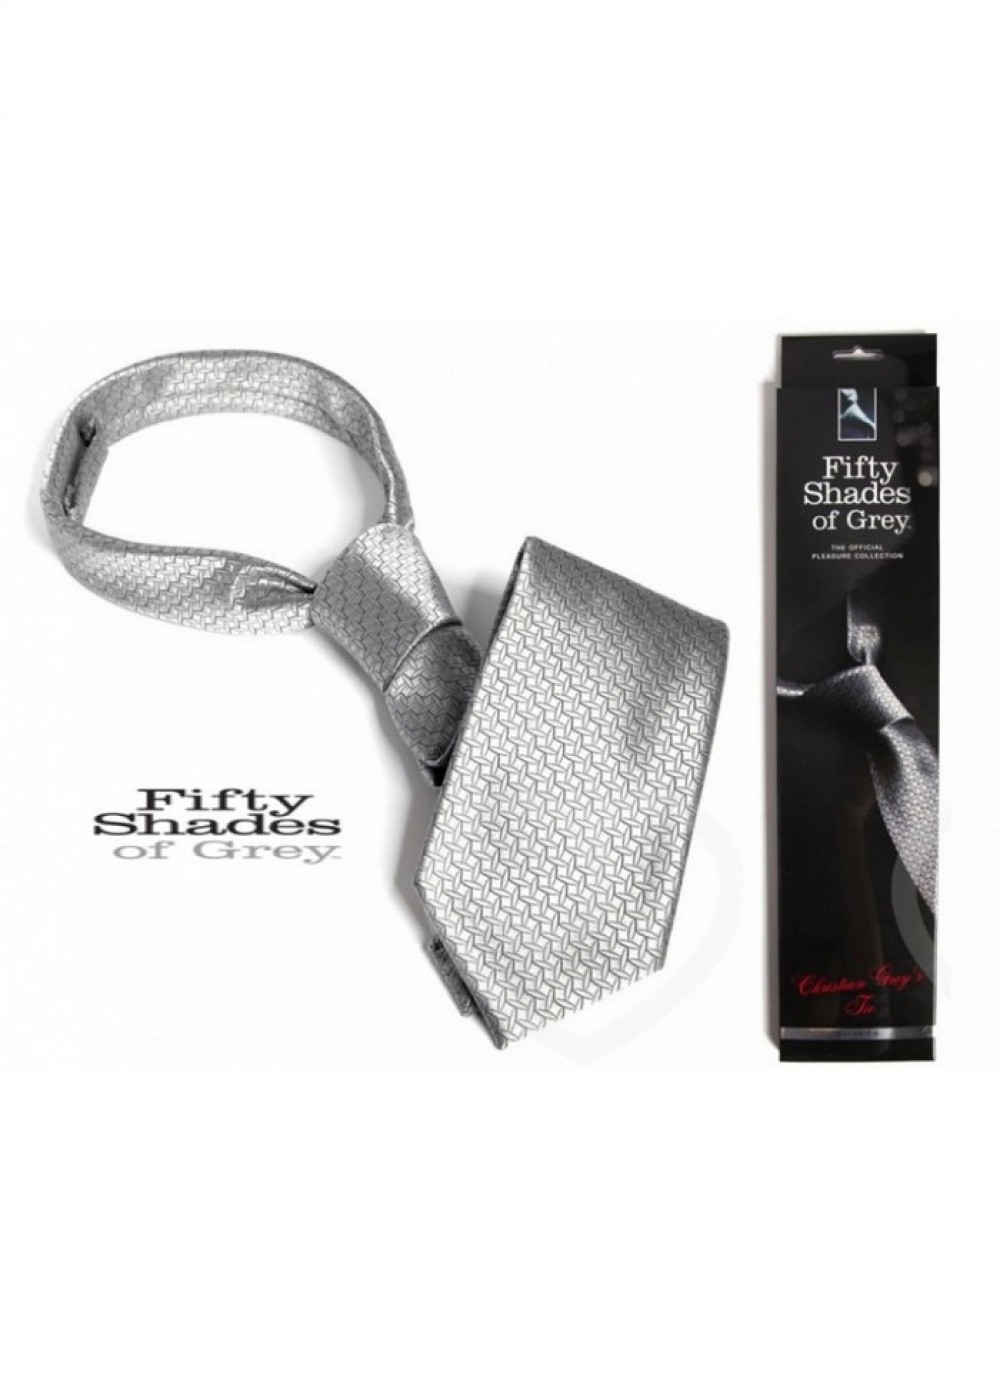 Fifty Shades-Cravate de Christian Grey